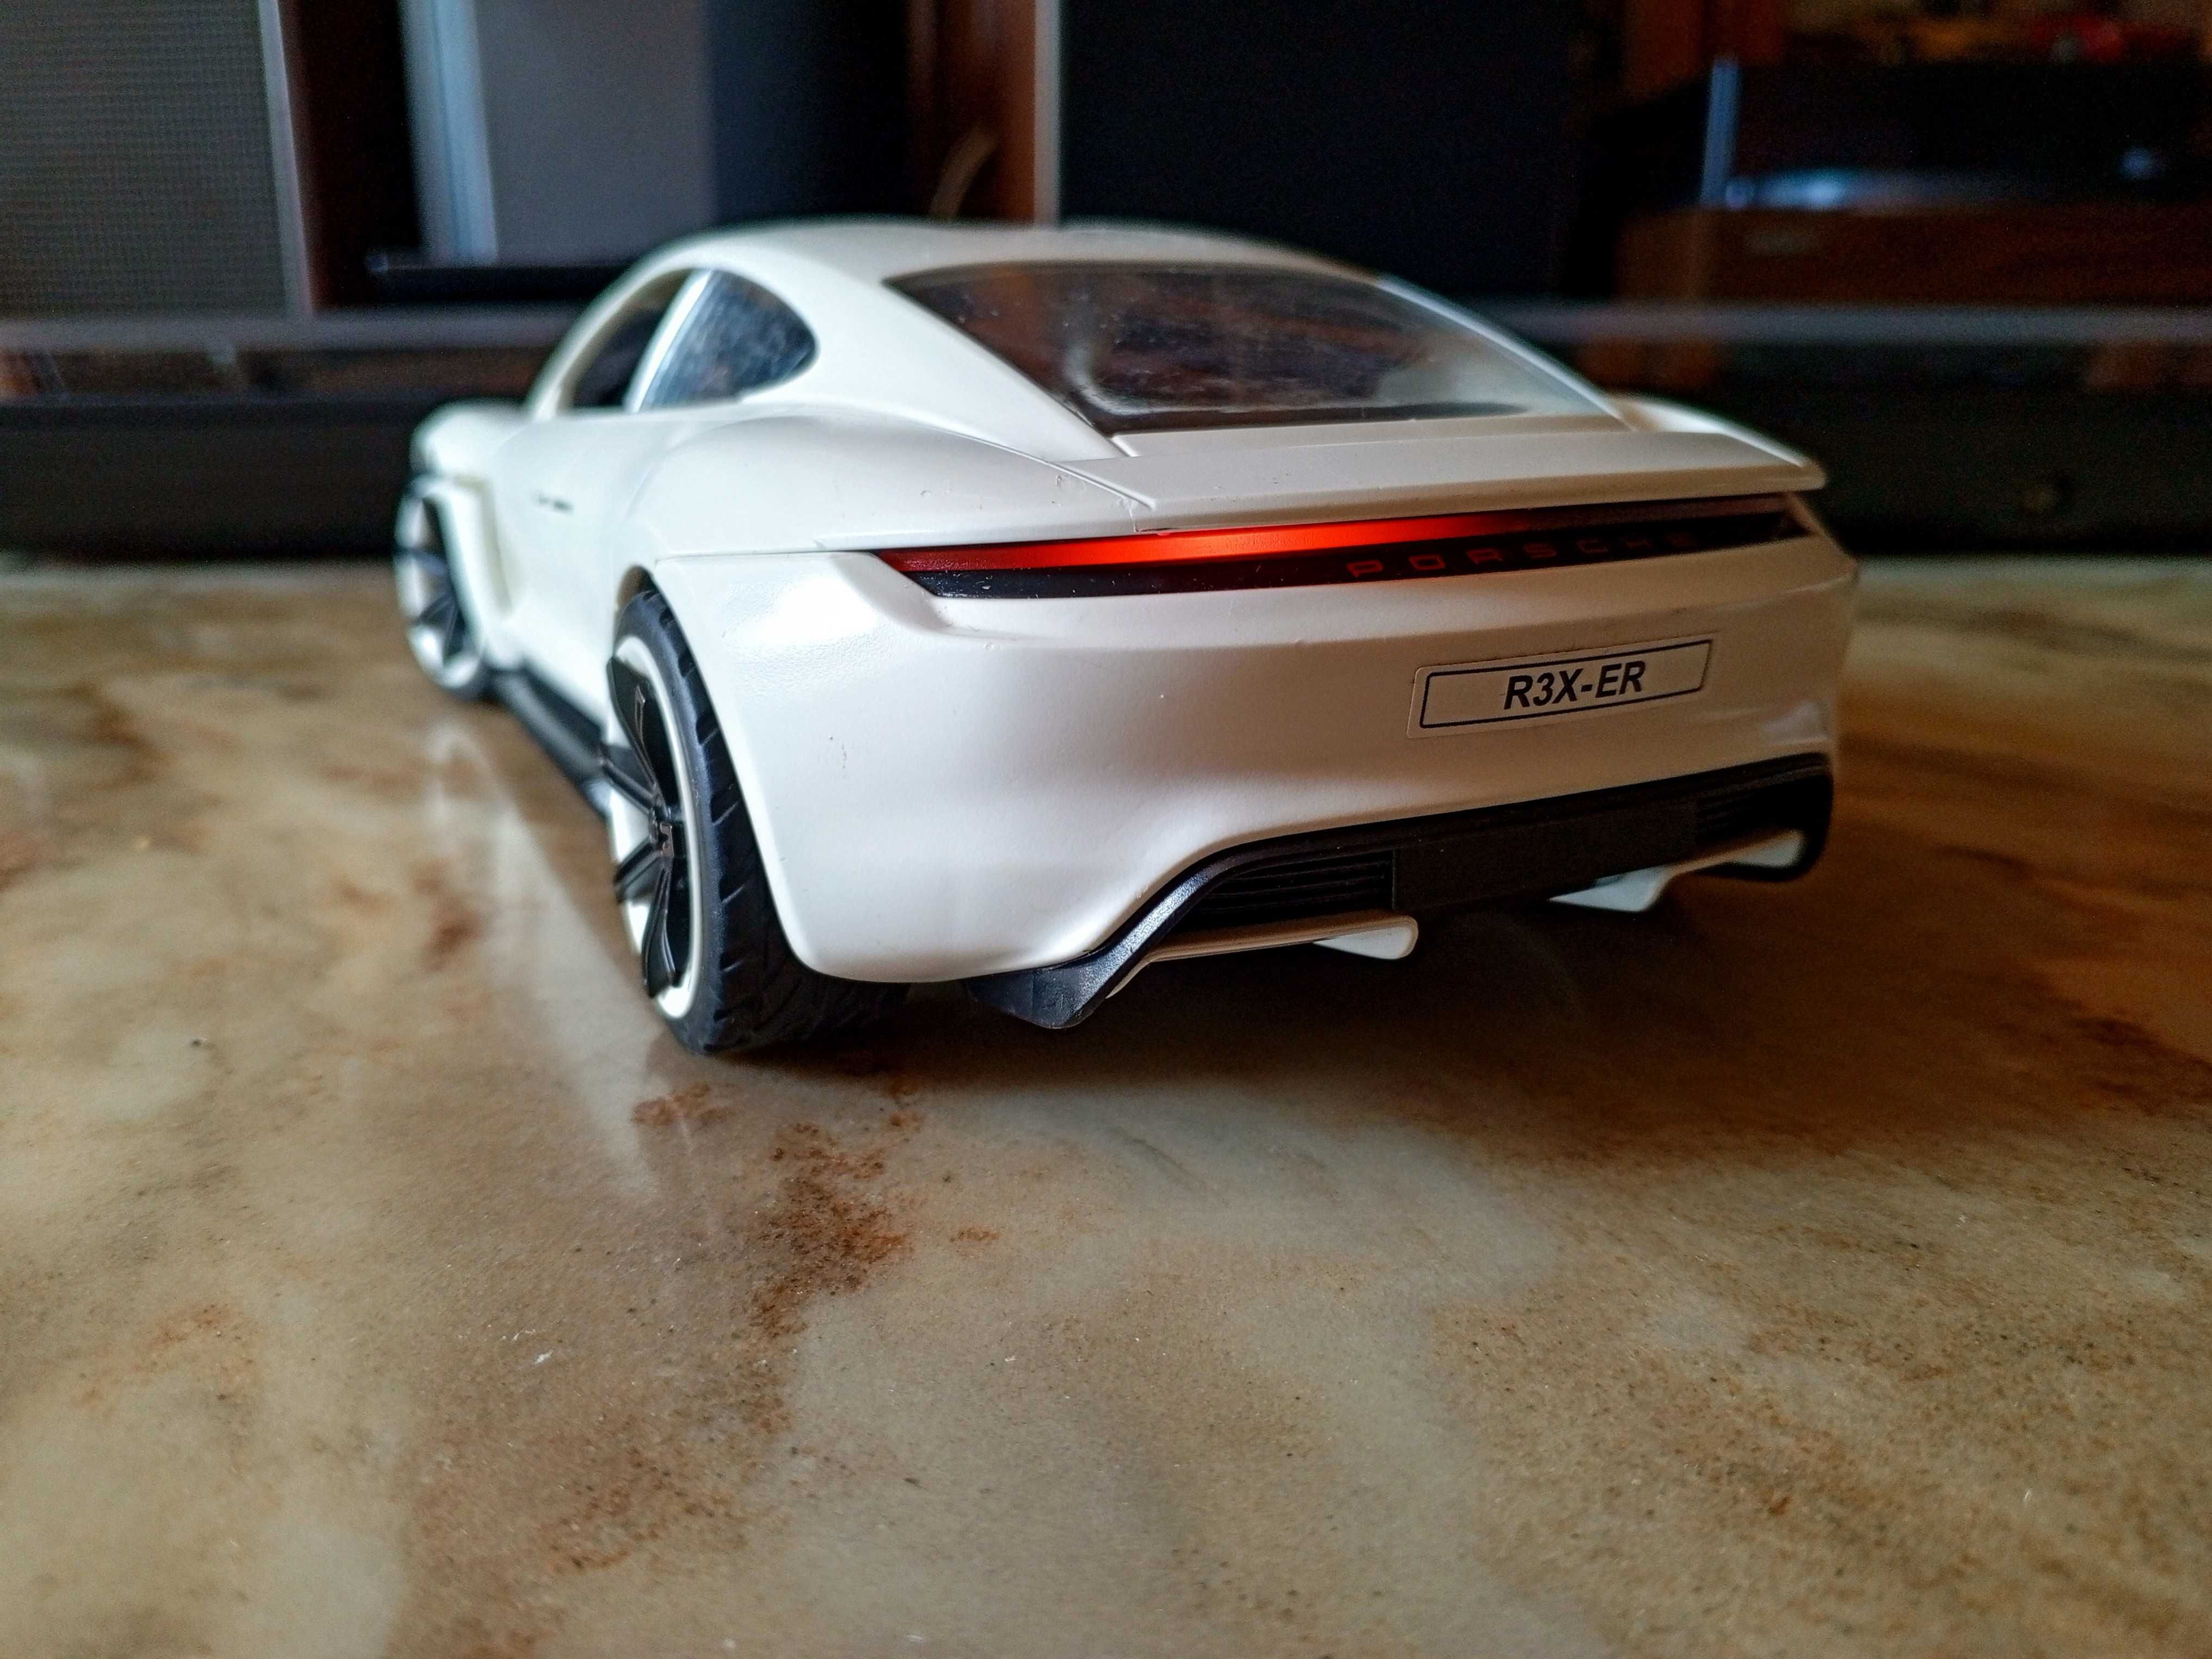 Playmobil Porsche Mission E 2.0 (Germany 1:18)